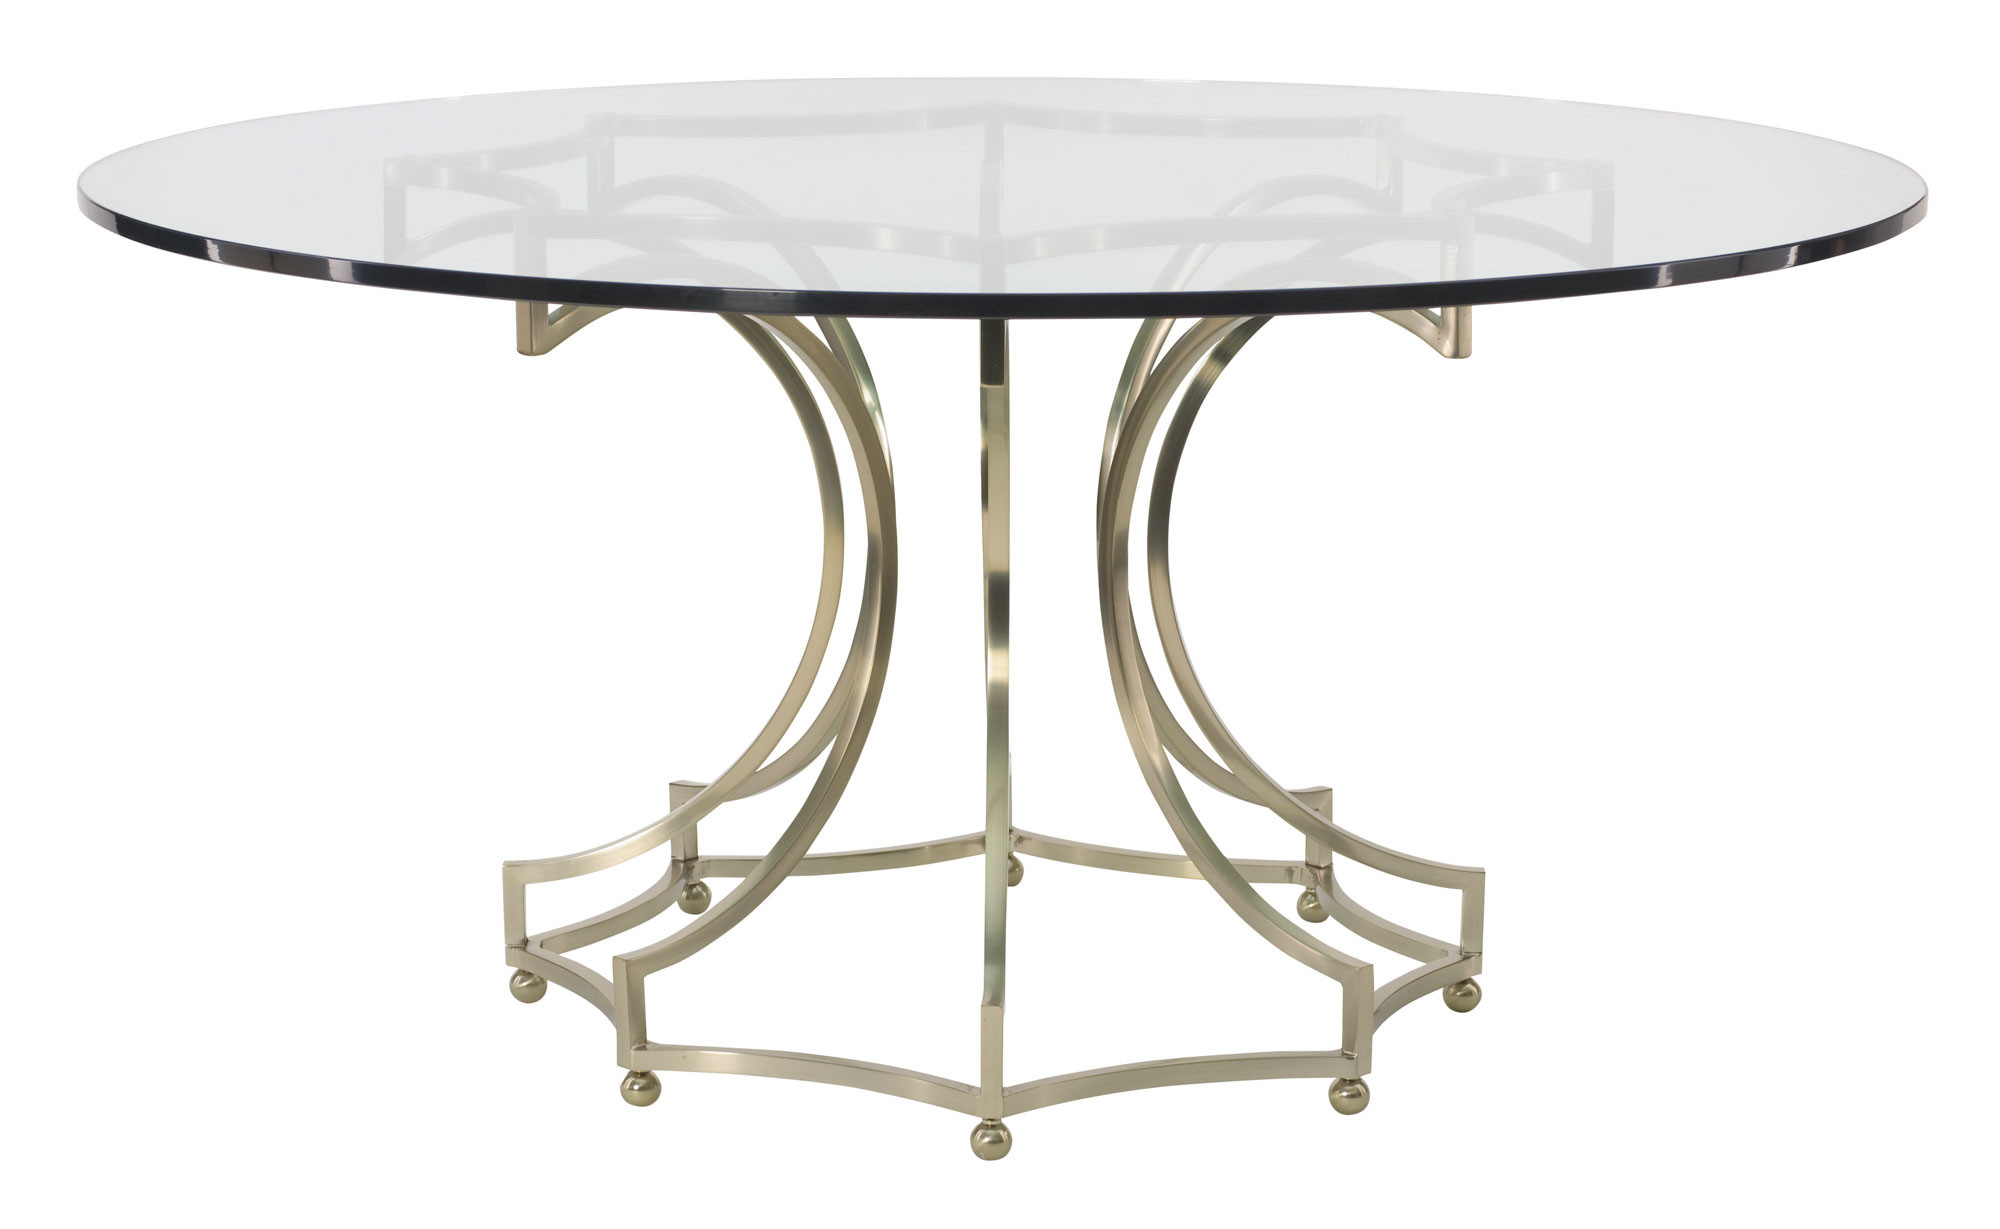 Стол круглый 1 м диаметр. Стол обеденный Scorpio Glass Round b4802. Обеденный стол Палладиум круглый. Стол с металлическими ножками. Круглый стол с металлическими ножками.